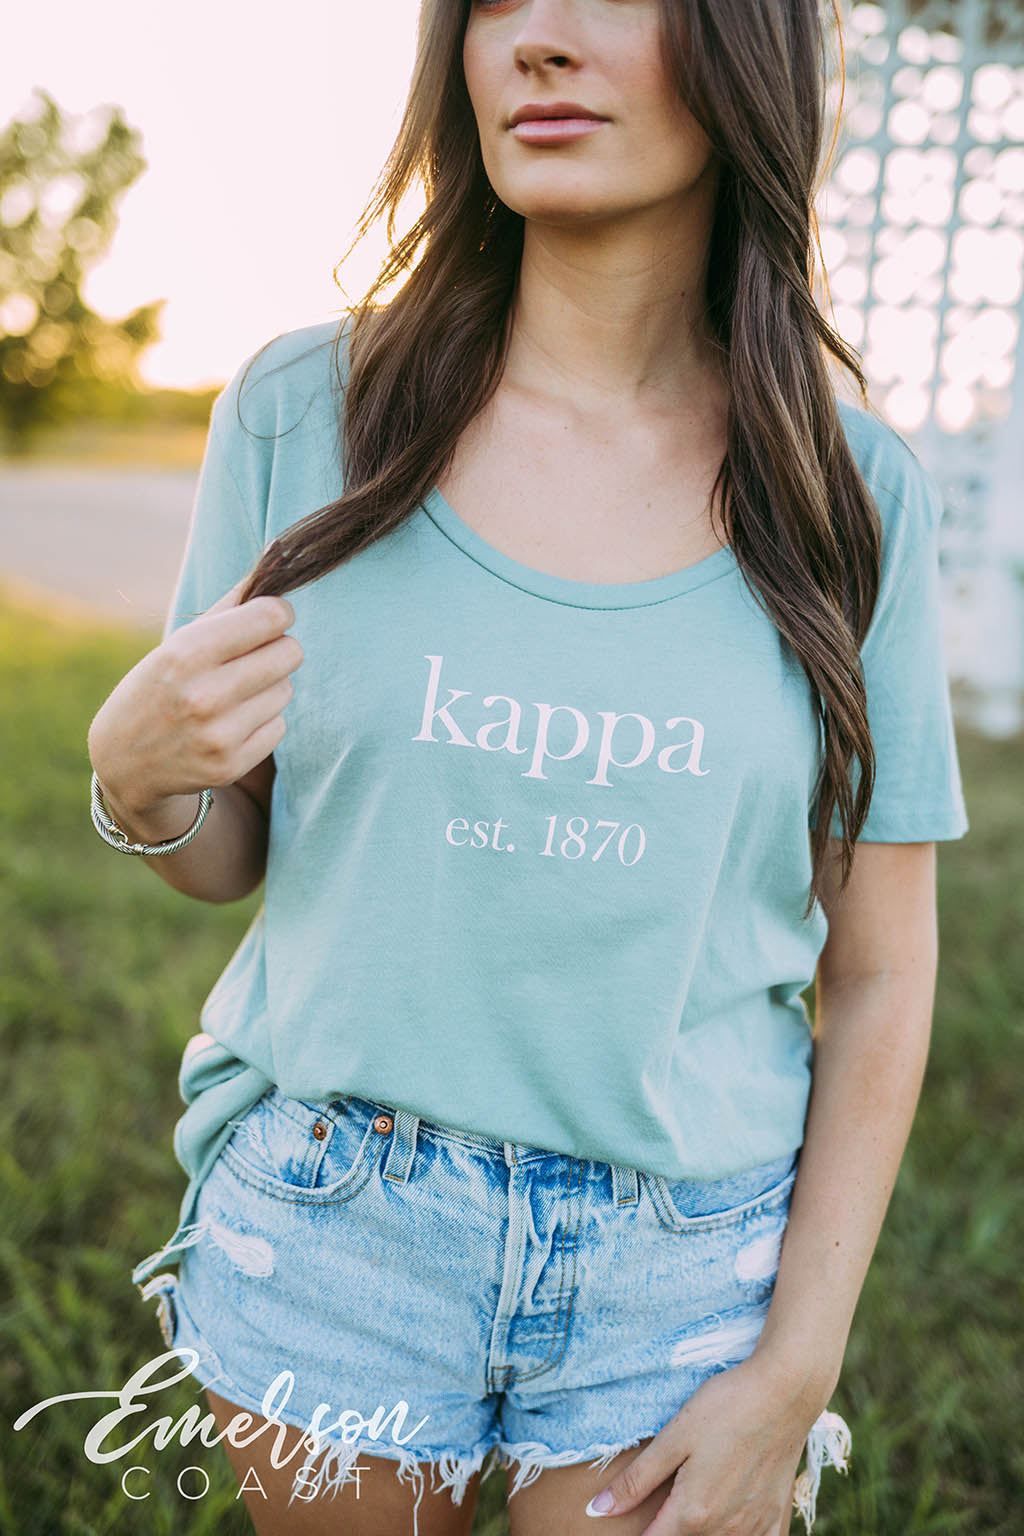 Kappa Kappa Gamma Recruitment Classic Slouchy Tee